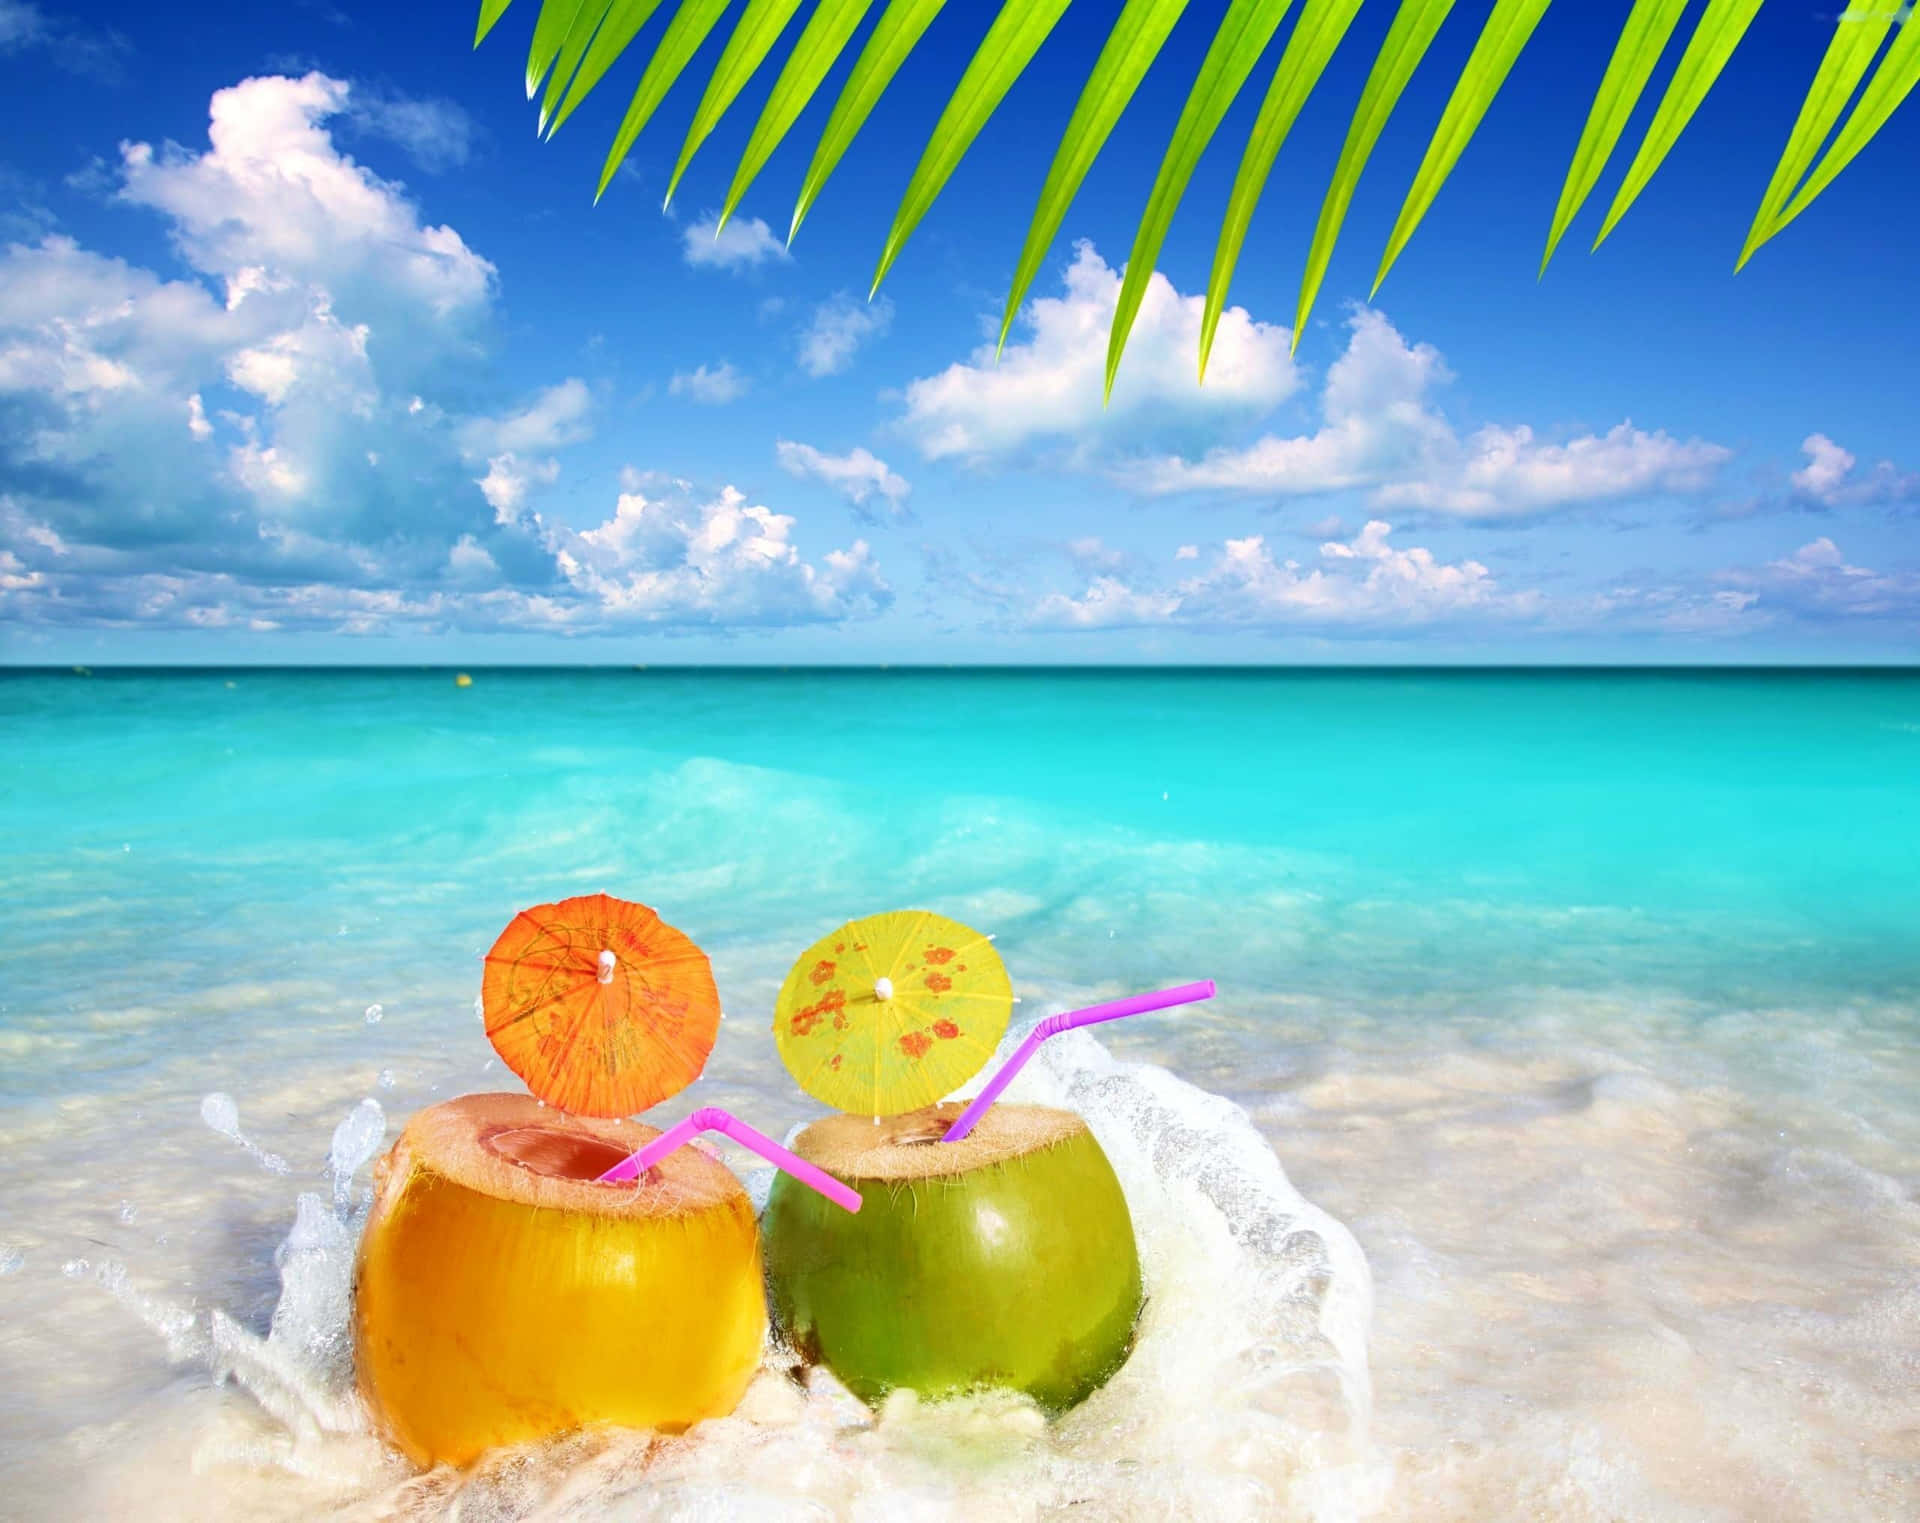 Enjoy the summer on this beautiful, serene beach! Wallpaper